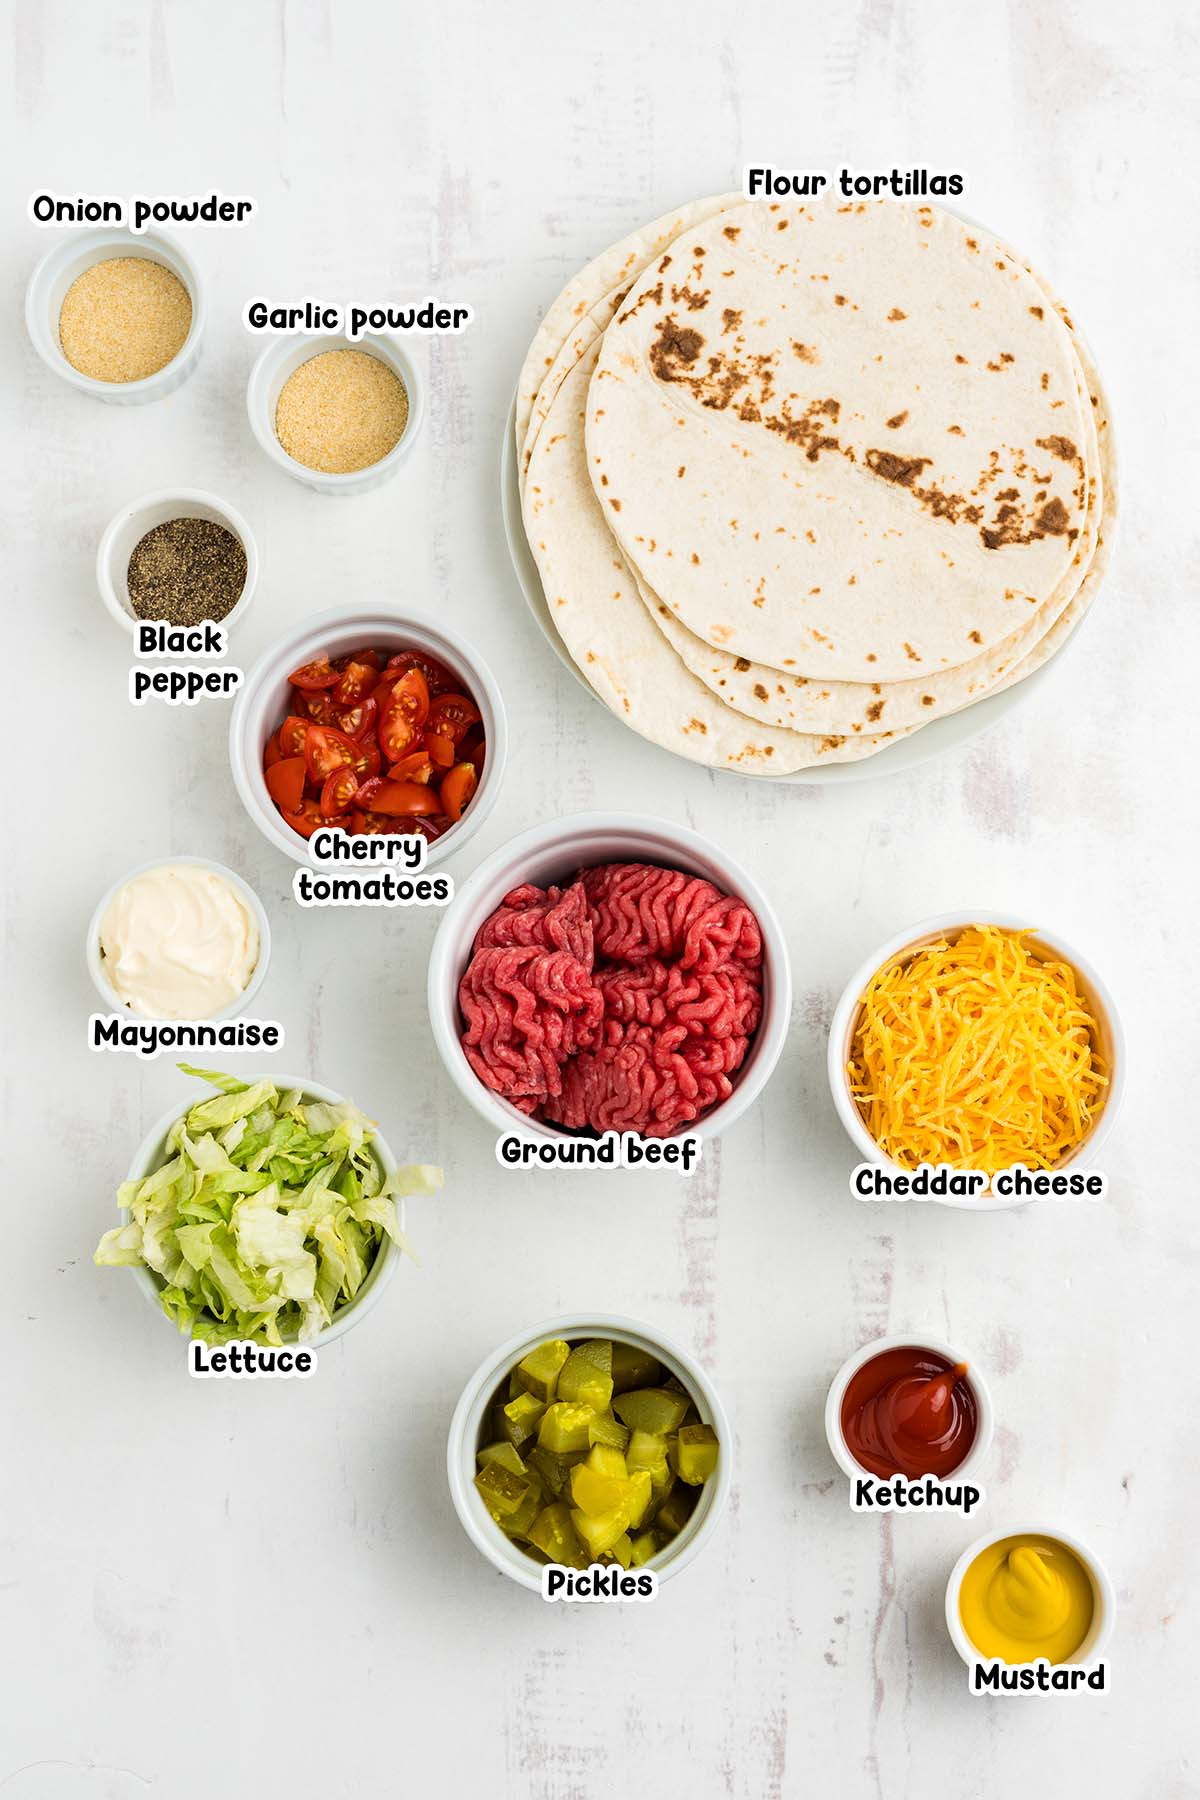 Cheeseburger Tacos ingredients.